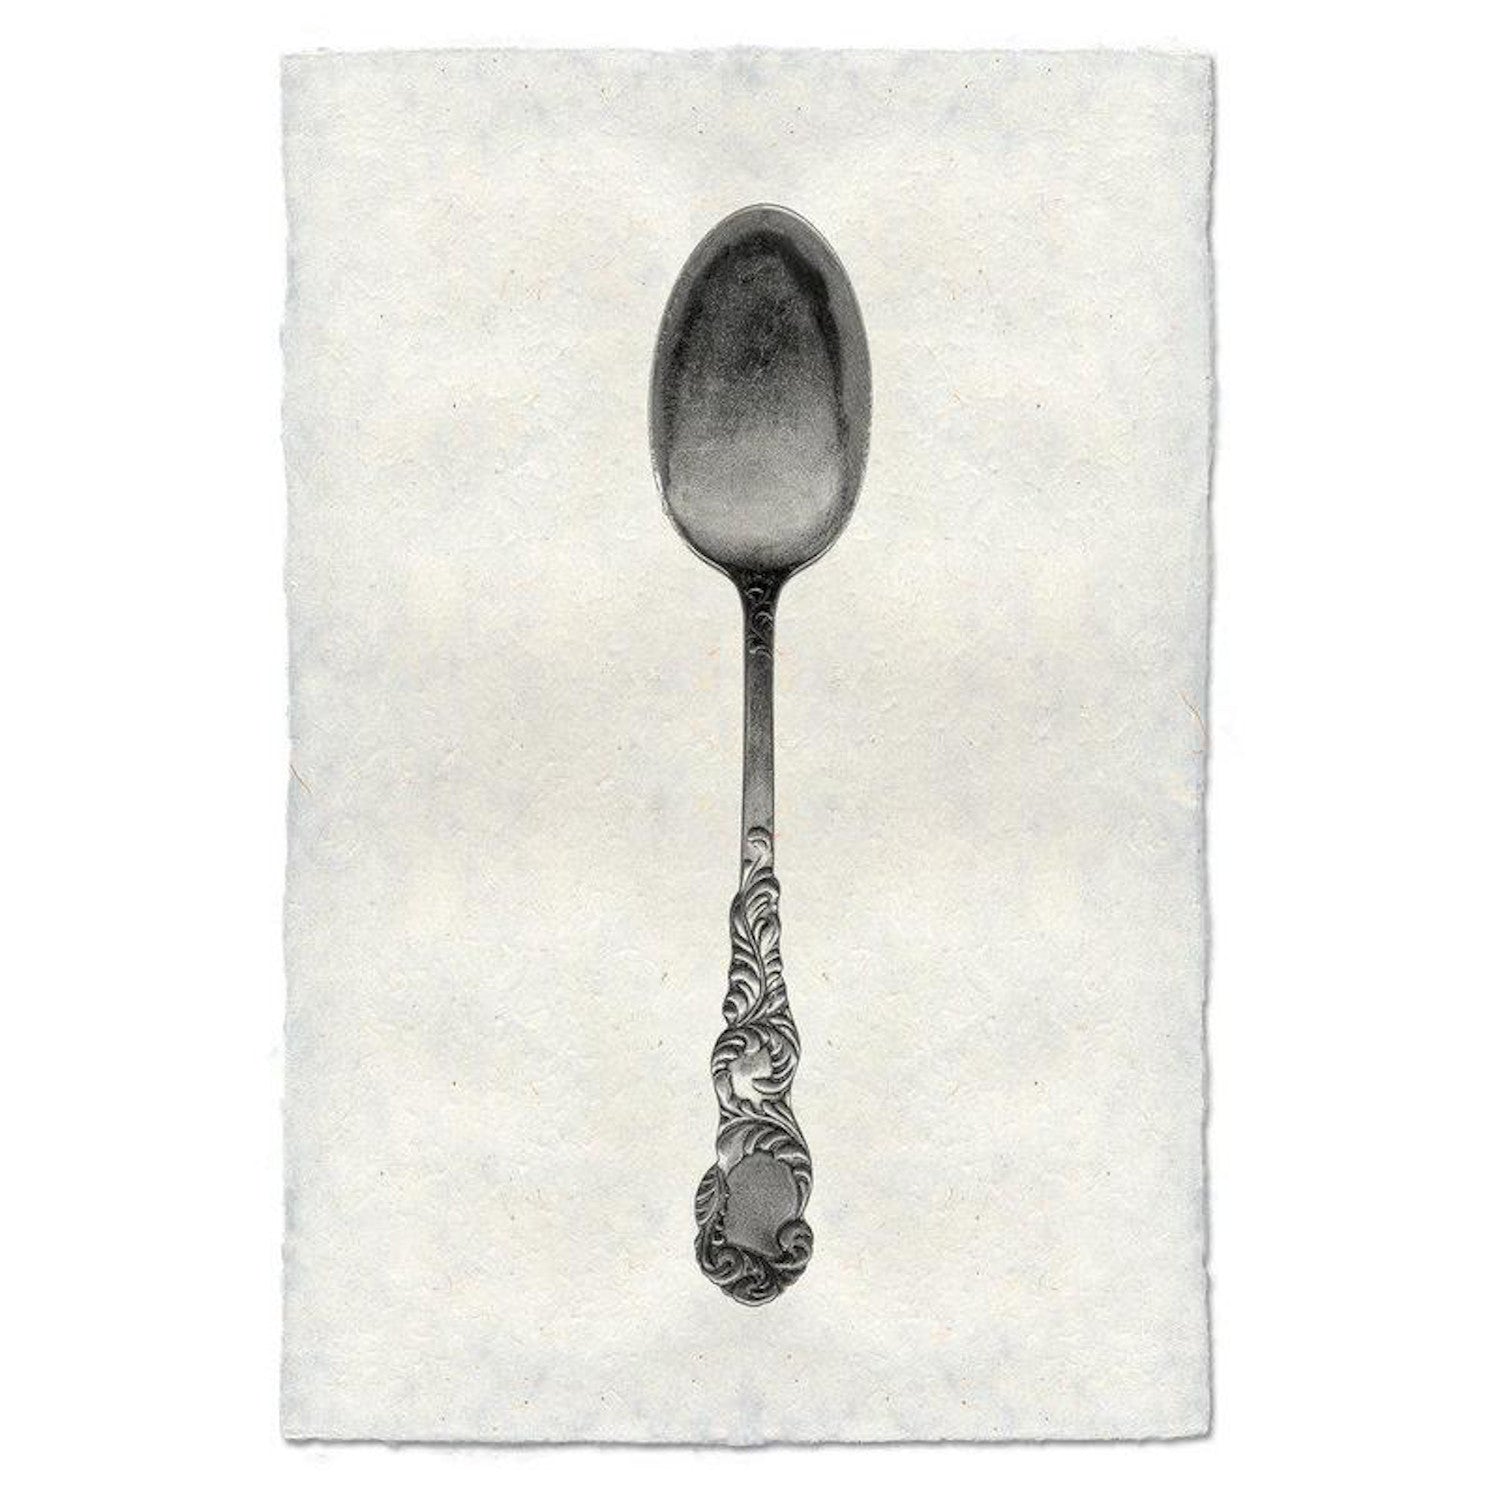 Vintage Spoon Art Print